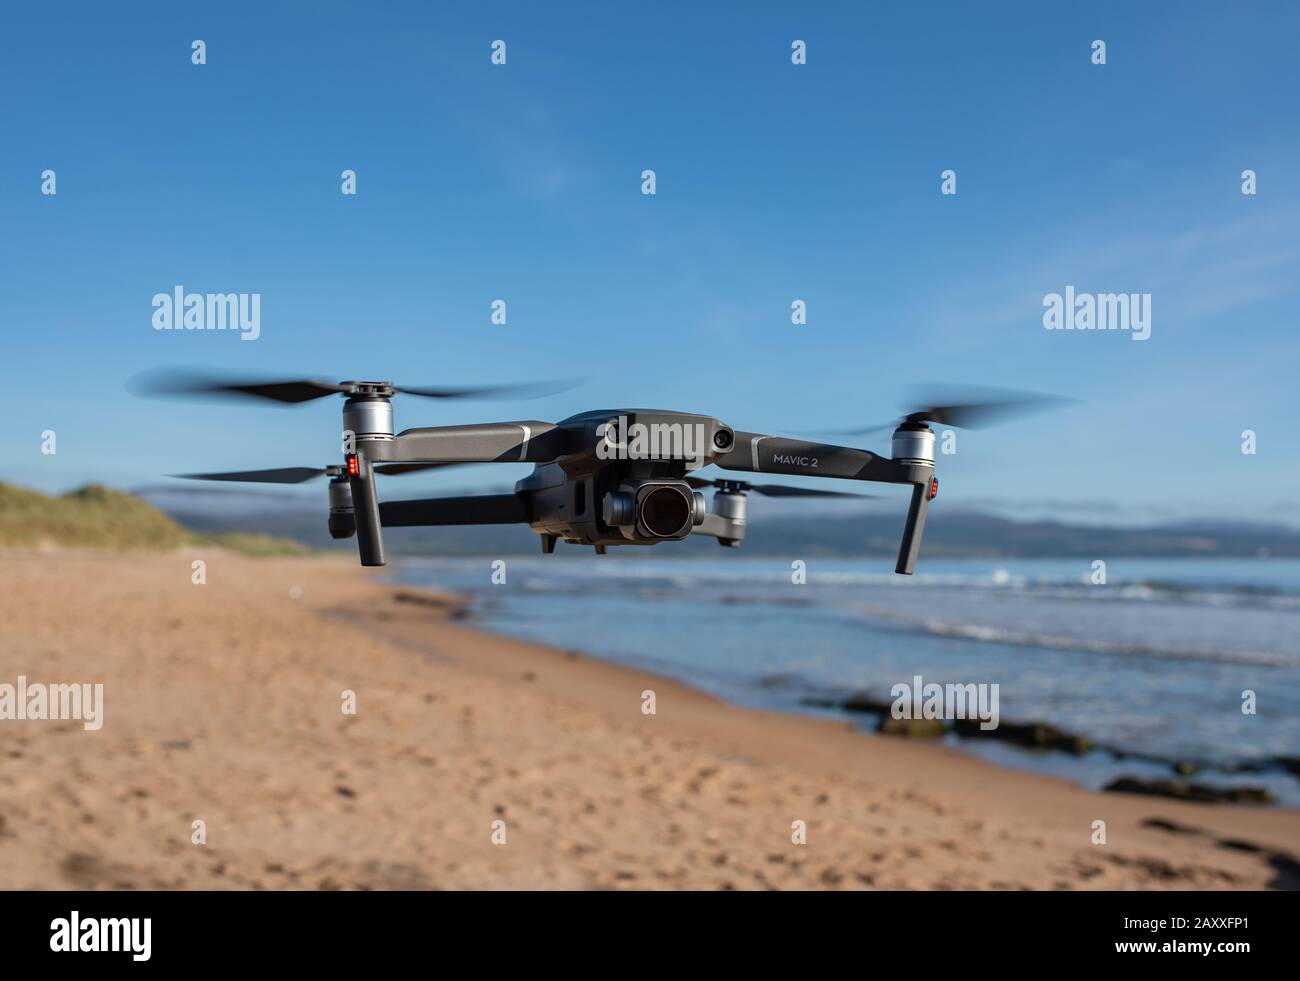 mavic pro 2 drone in flight over Embo beach Stock Photo